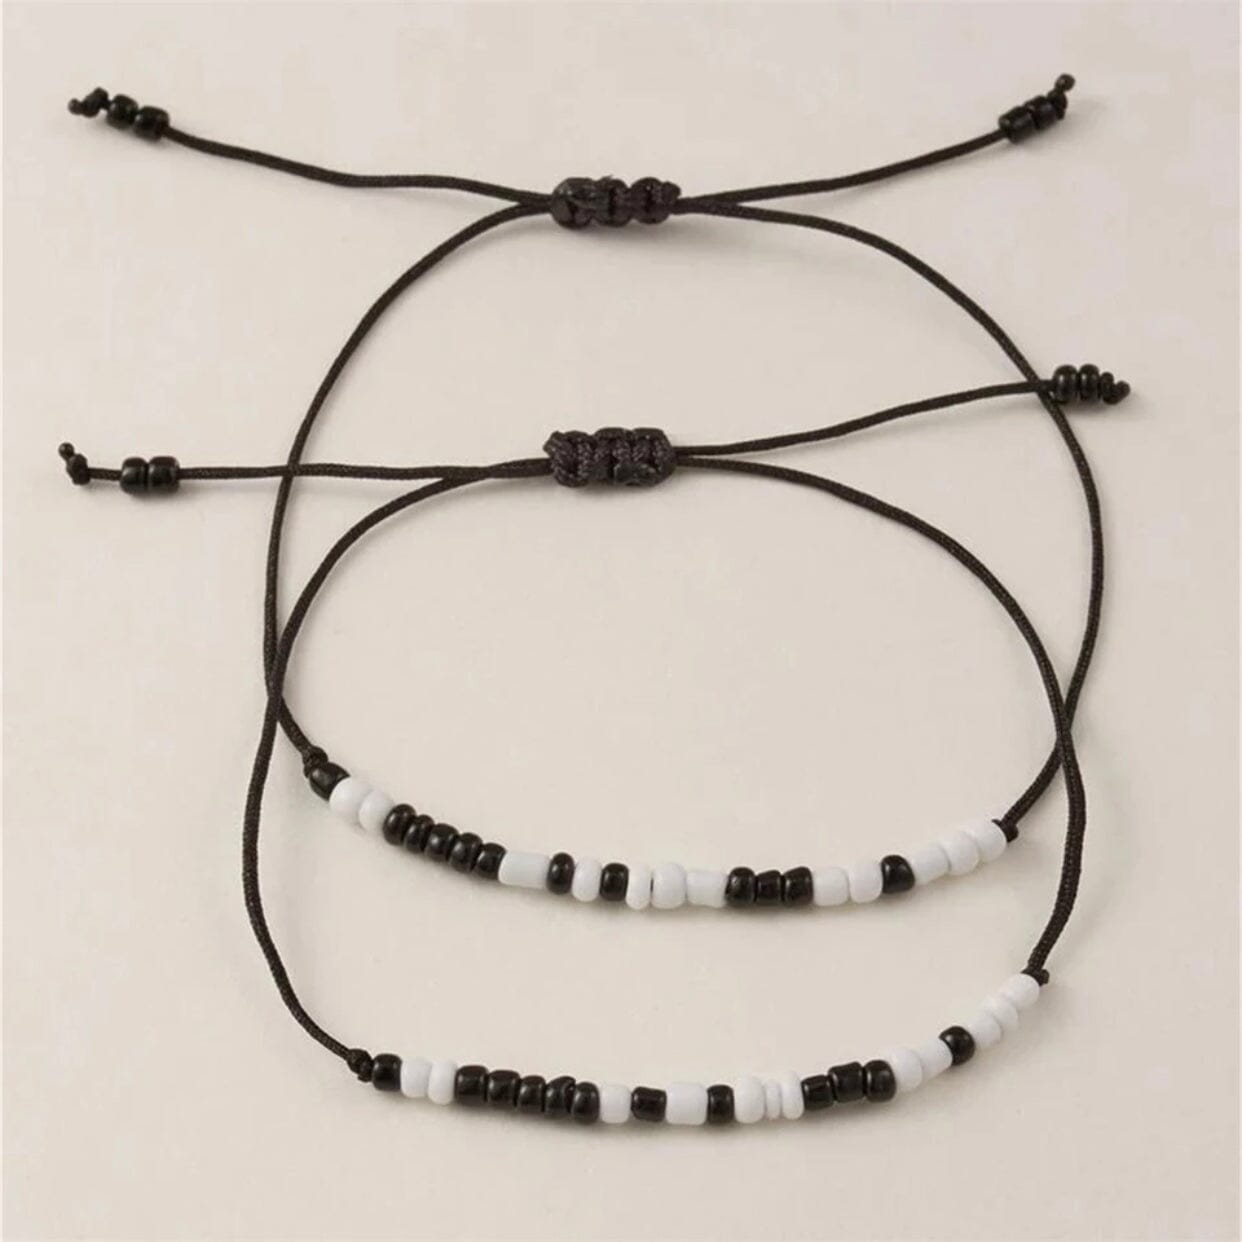 I Love You - Morse Code Bracelet Set Jewelry - 